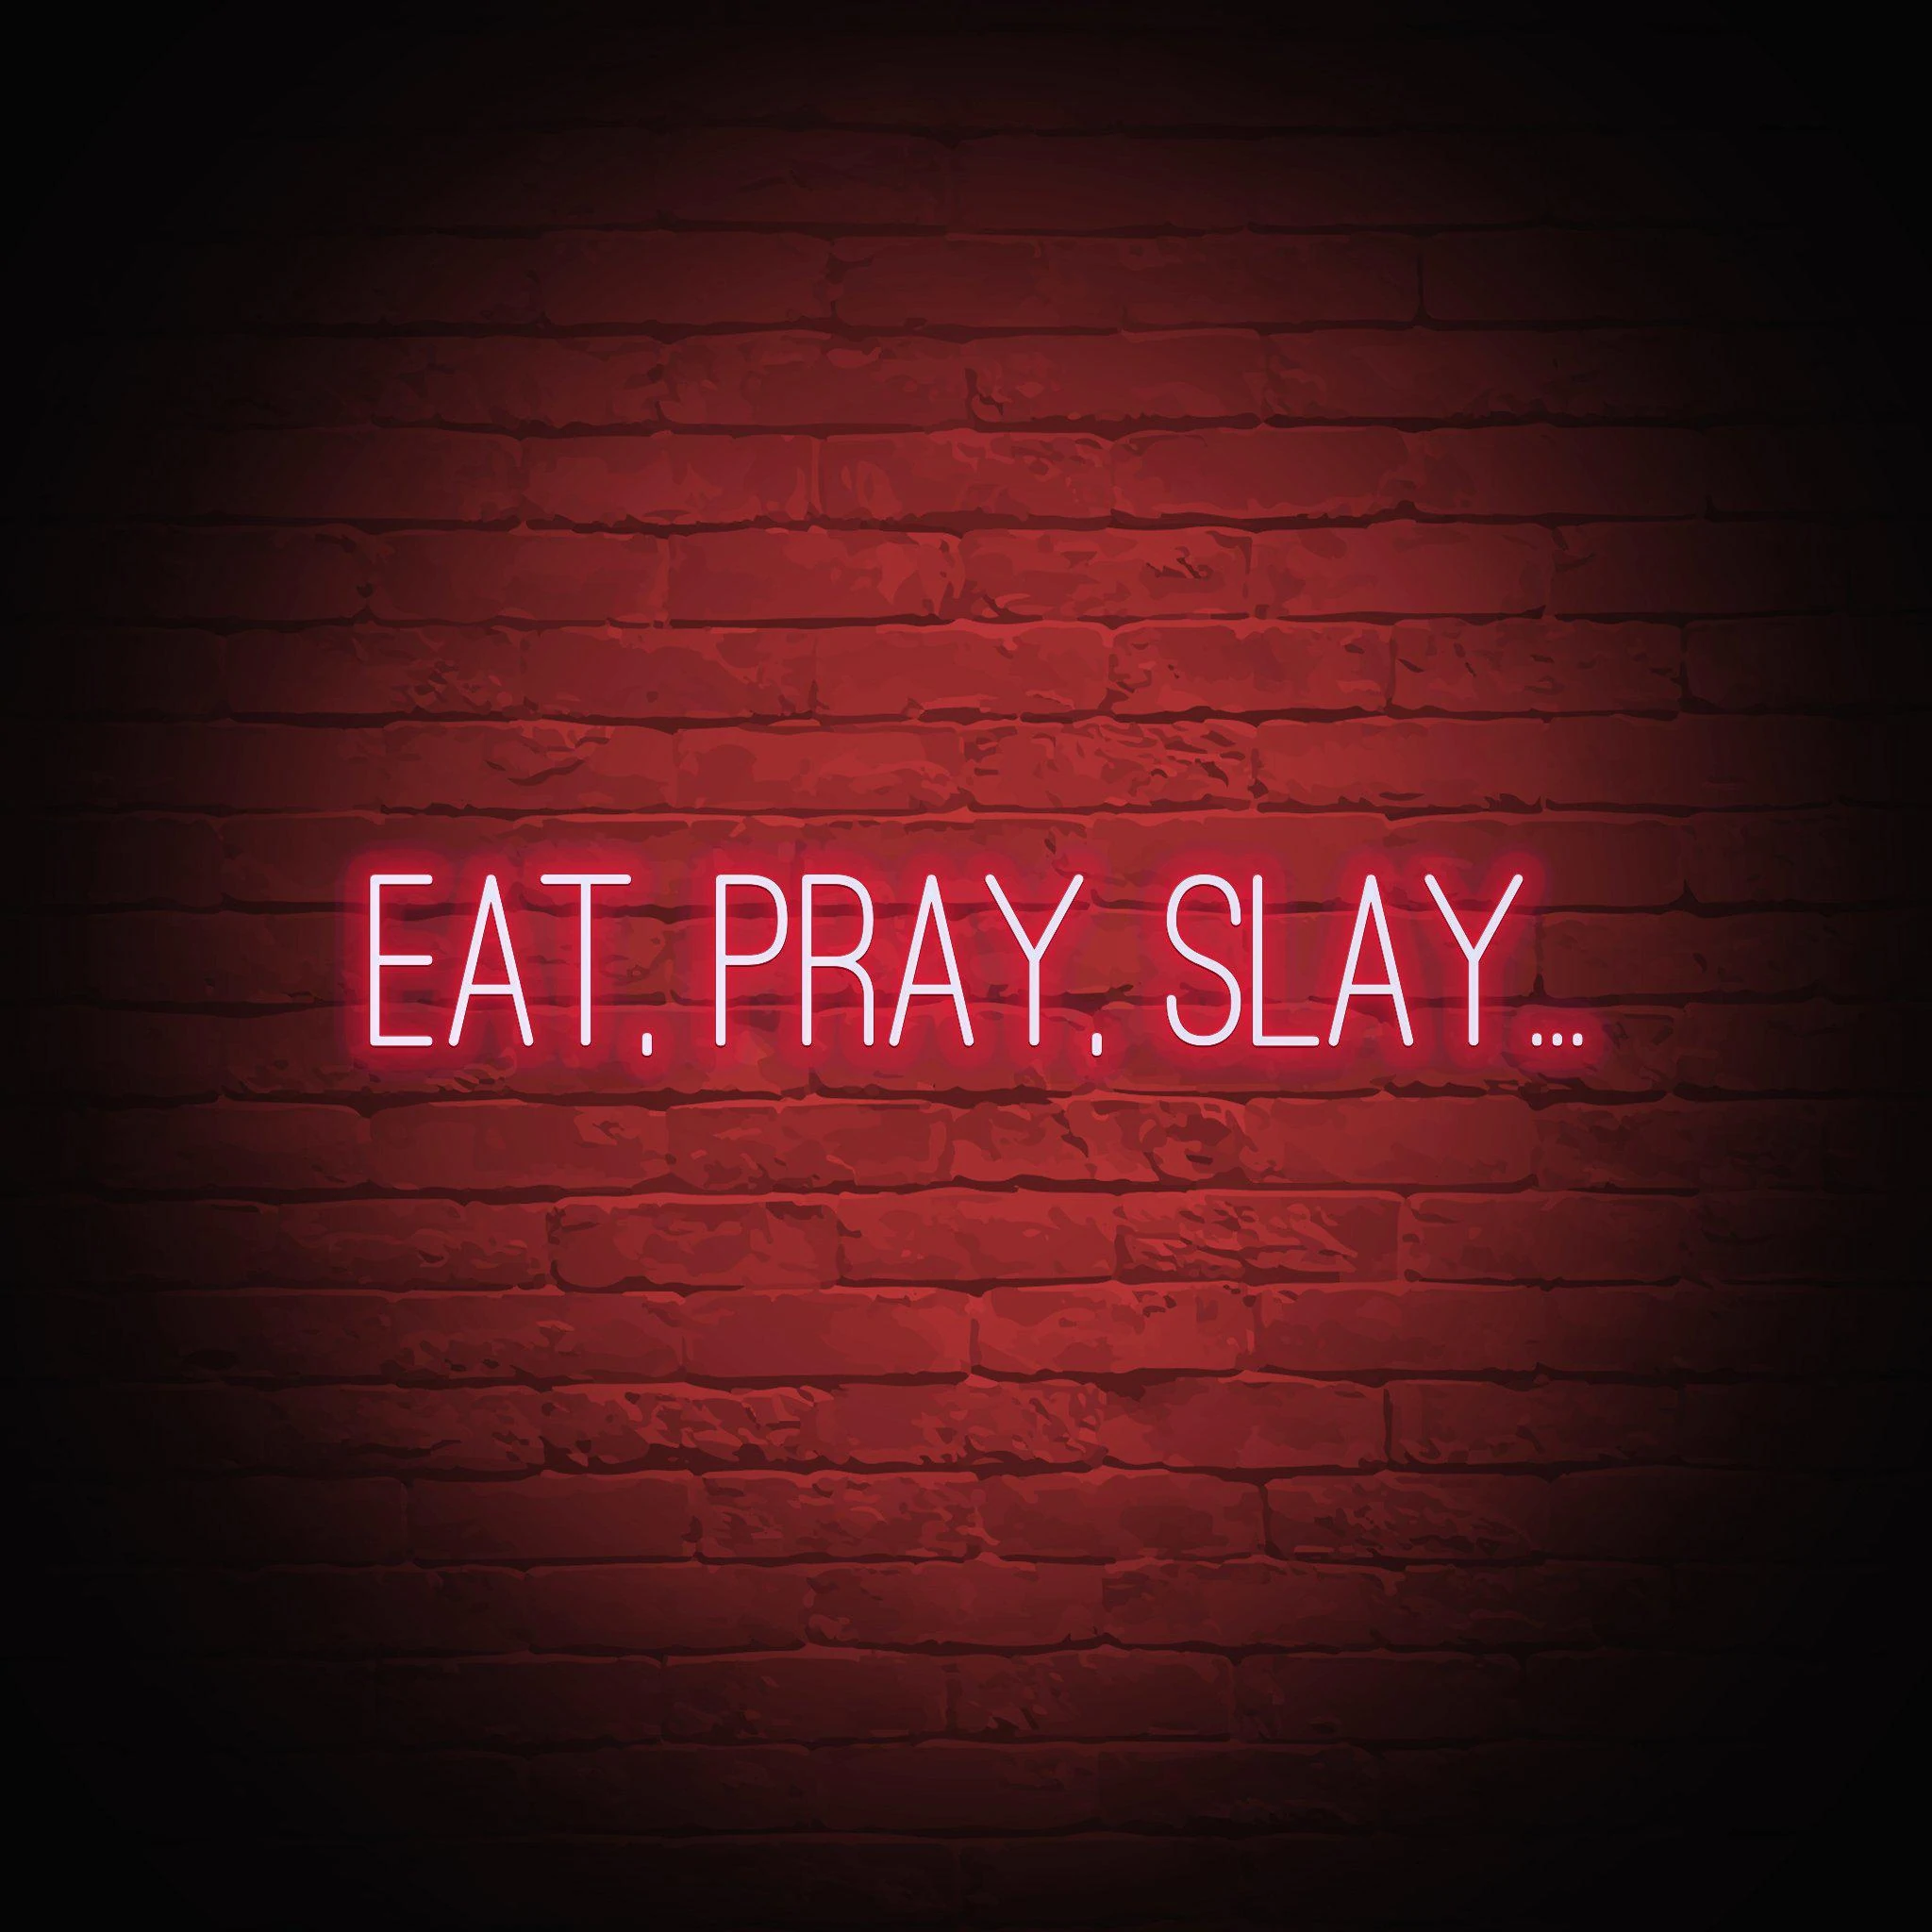 'EAT PRAY SLAY' NEON SIGN